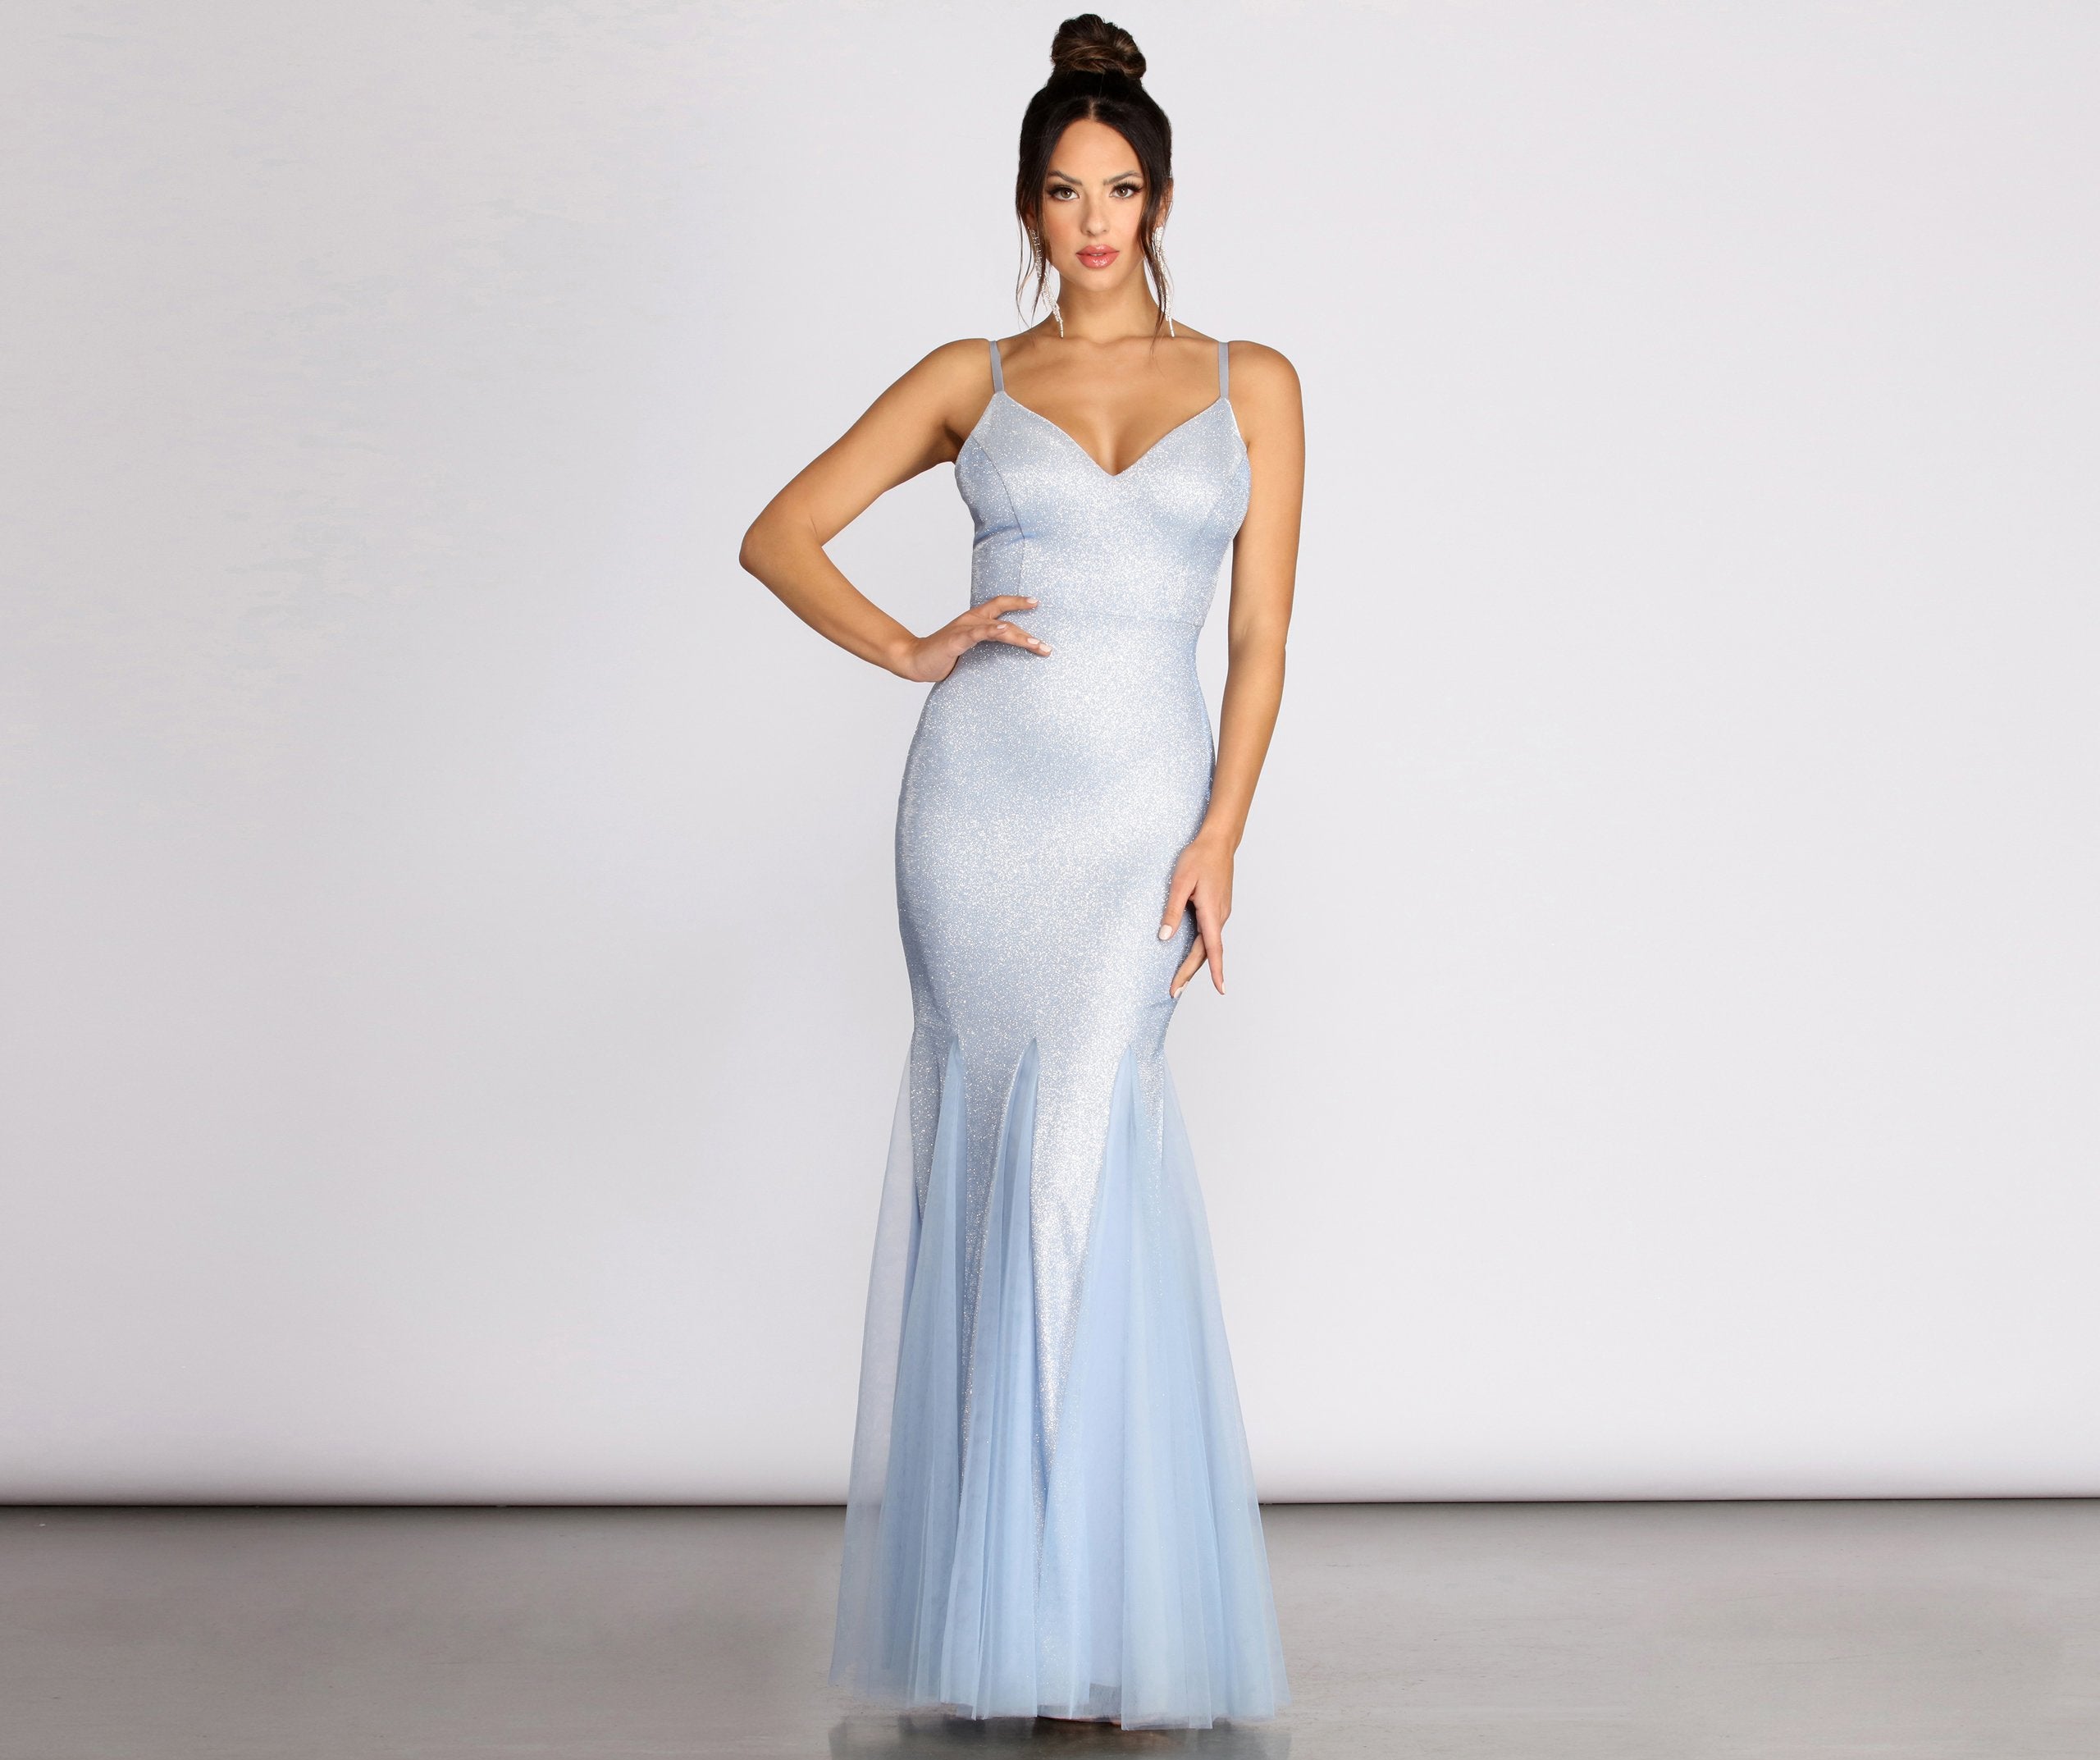 Ciara Glitter Tulle Mermaid Dress Oshnow